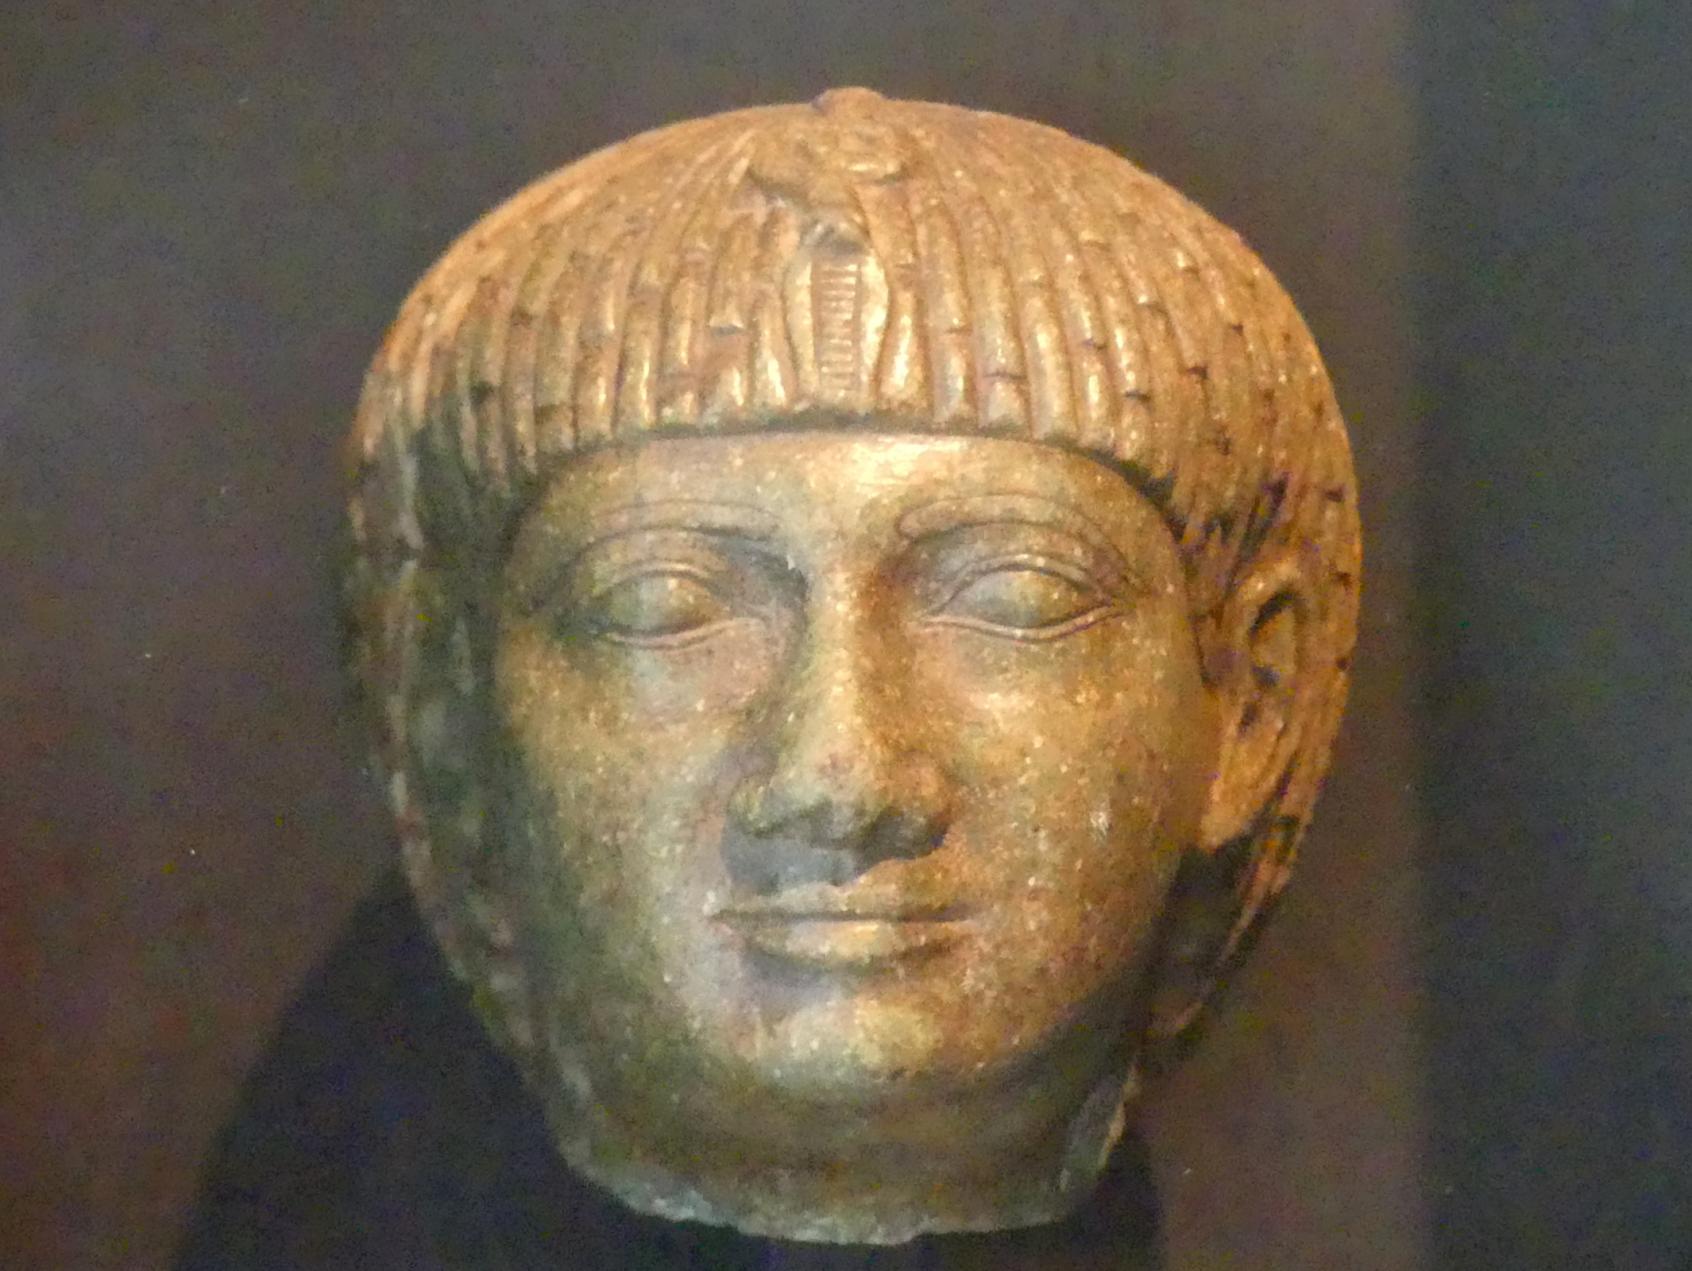 Kopf einer Statue des Pharao Osorkon I., 22. Dynastie, Undatiert, 900 v. Chr., Bild 1/3